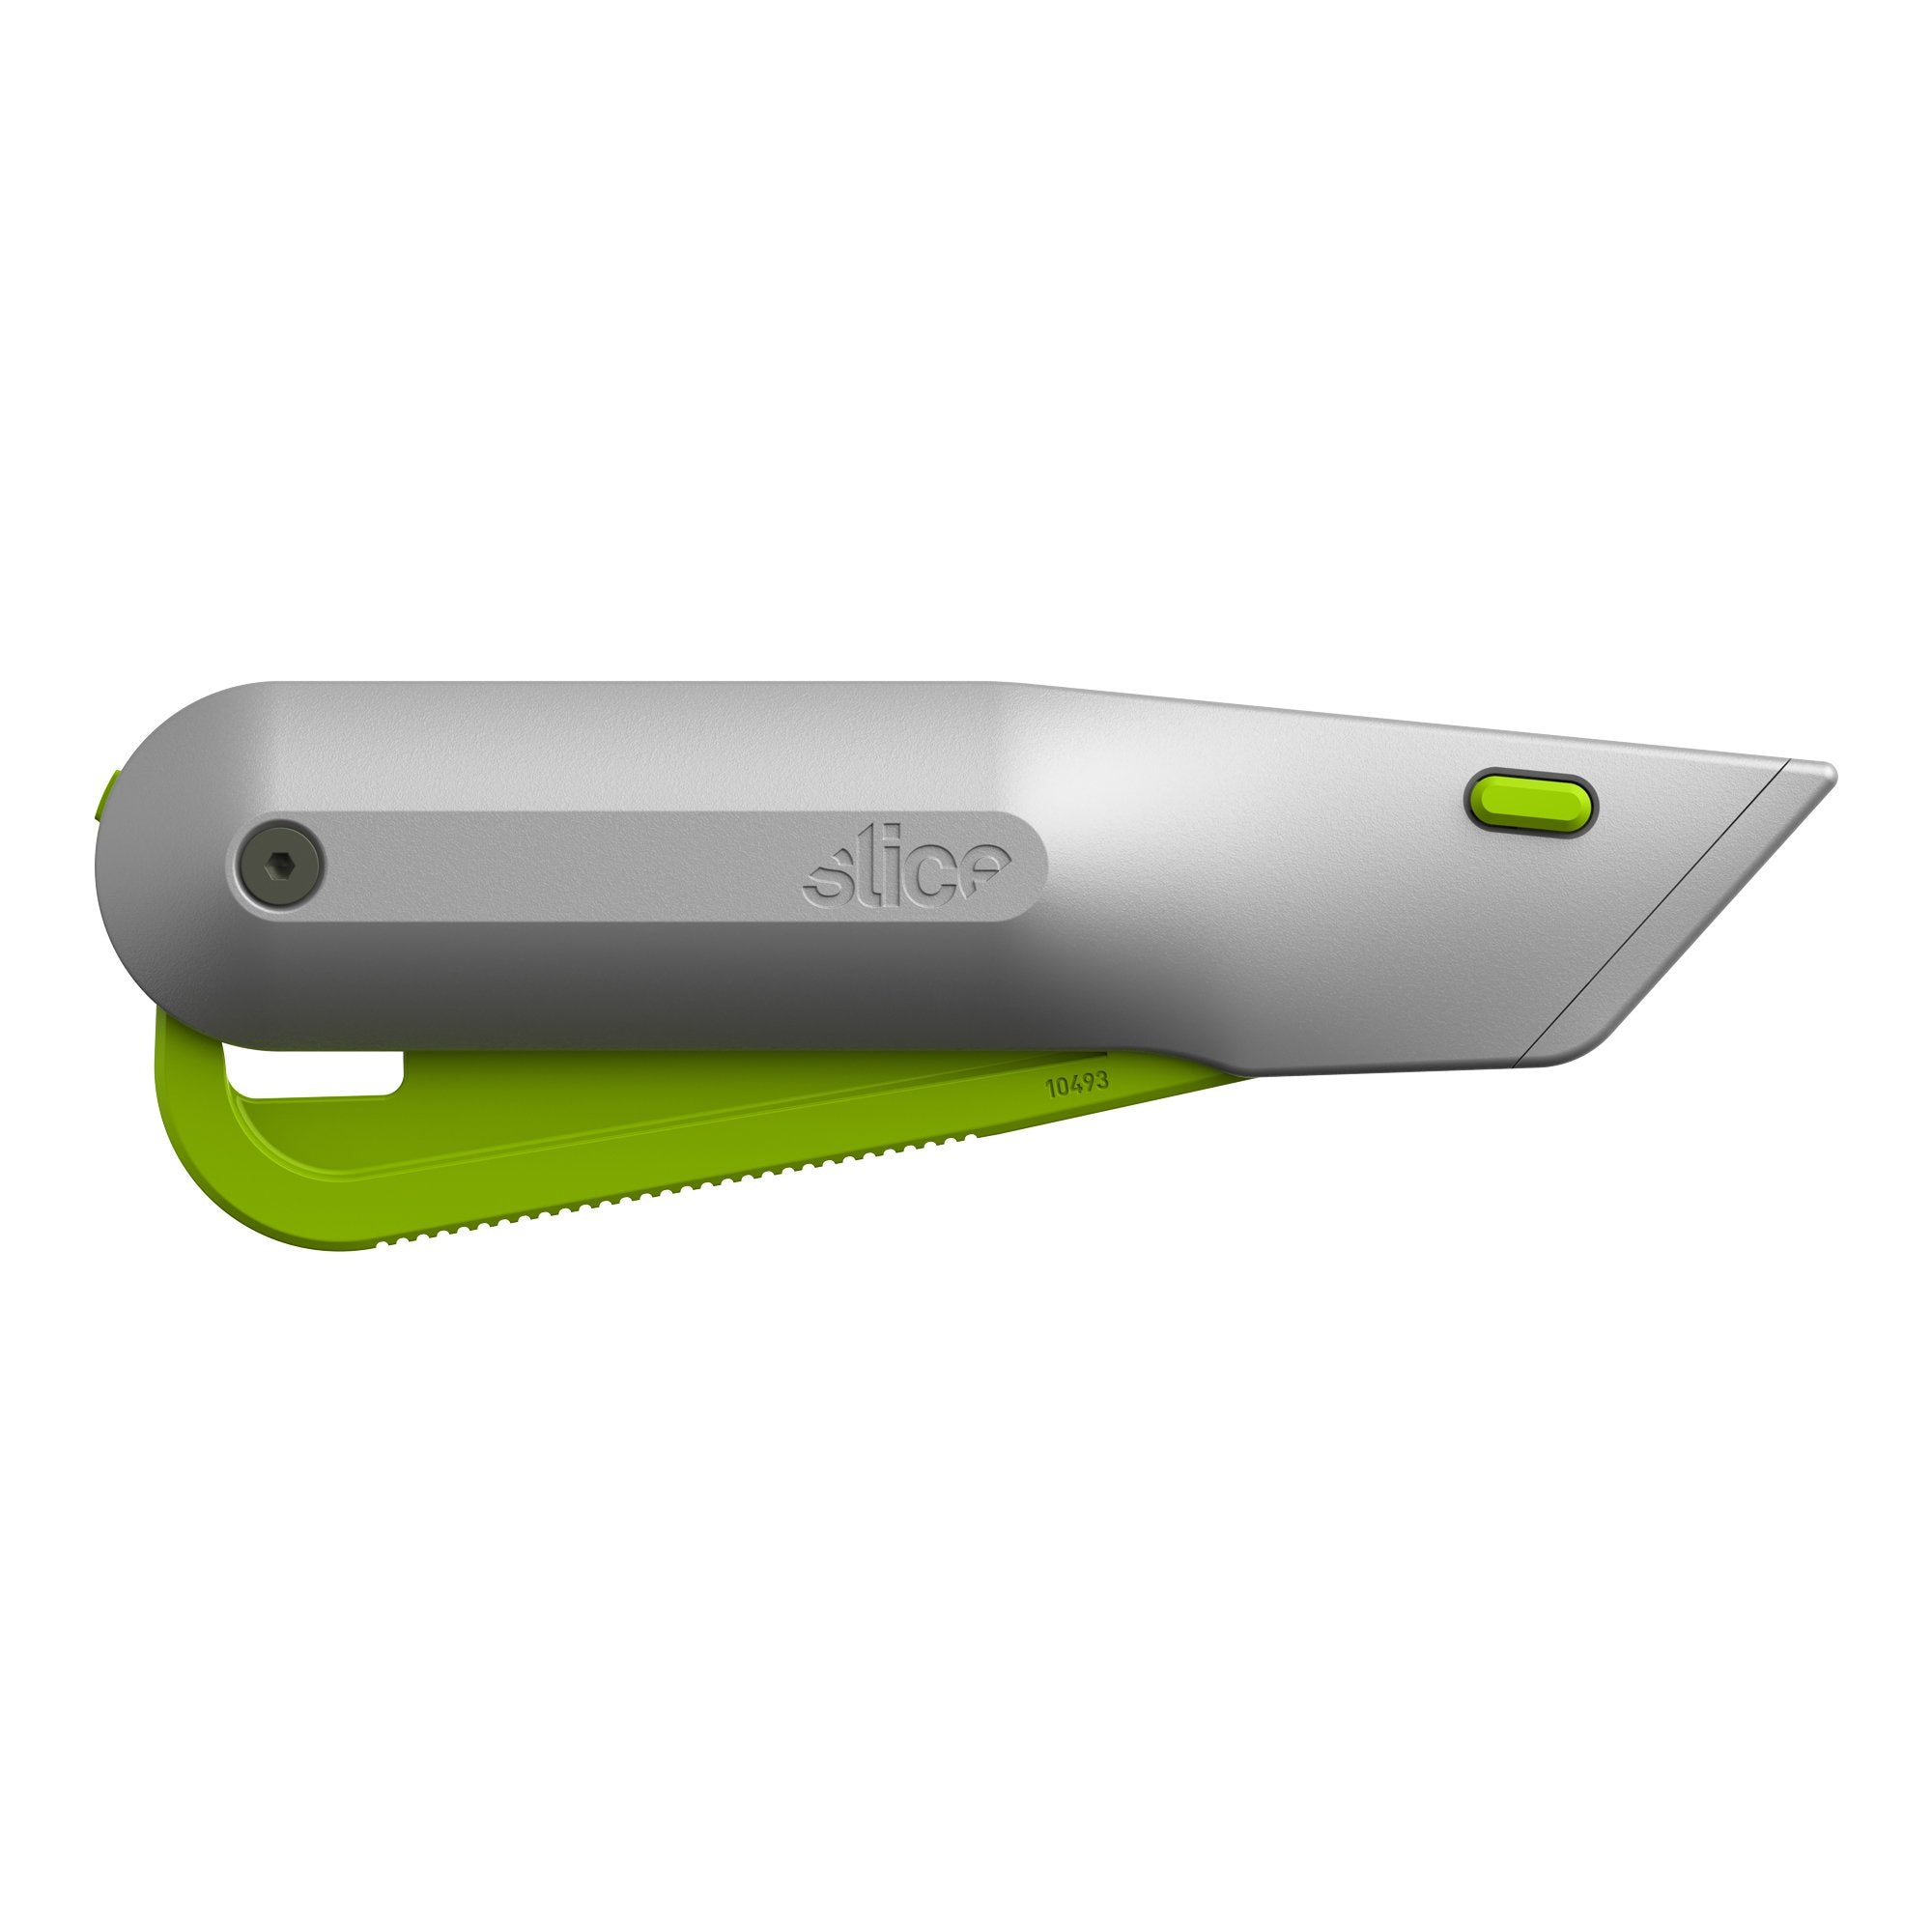 Slice Squeeze Knife Auto Retractable Metal Handle - 10493